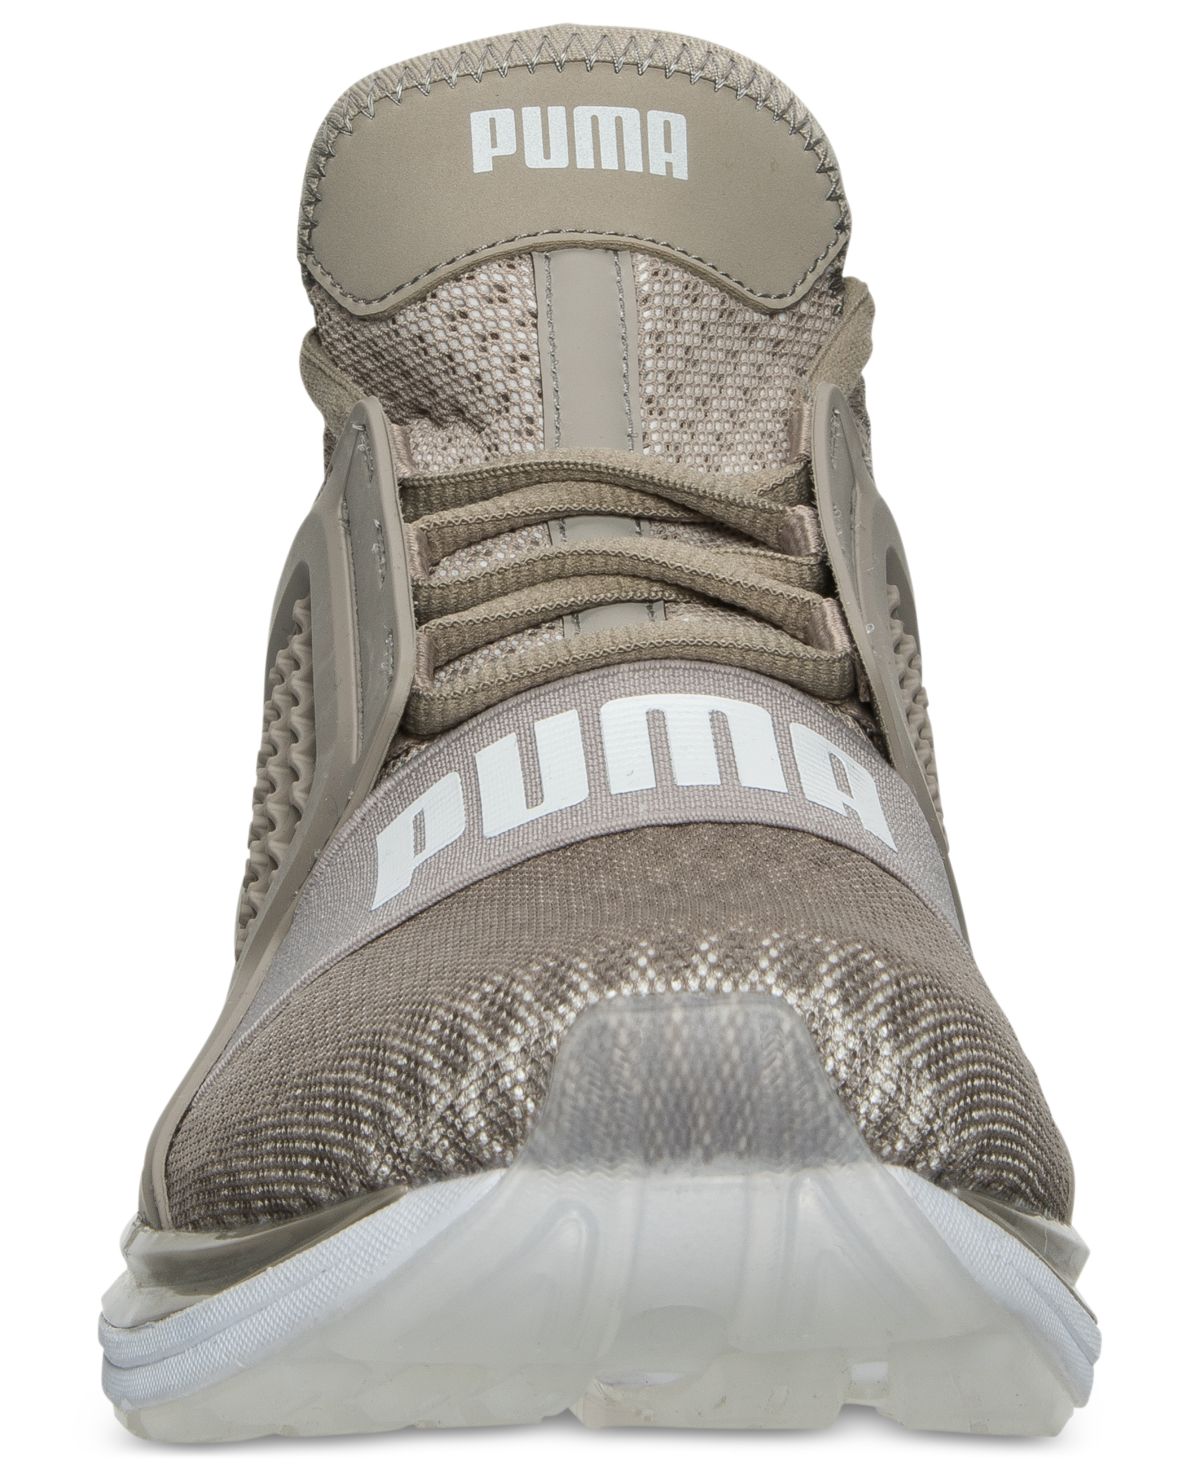 Puma Men's Ignite Limitless Vintage Sneaker Shoe, Khaki - image 3 of 3